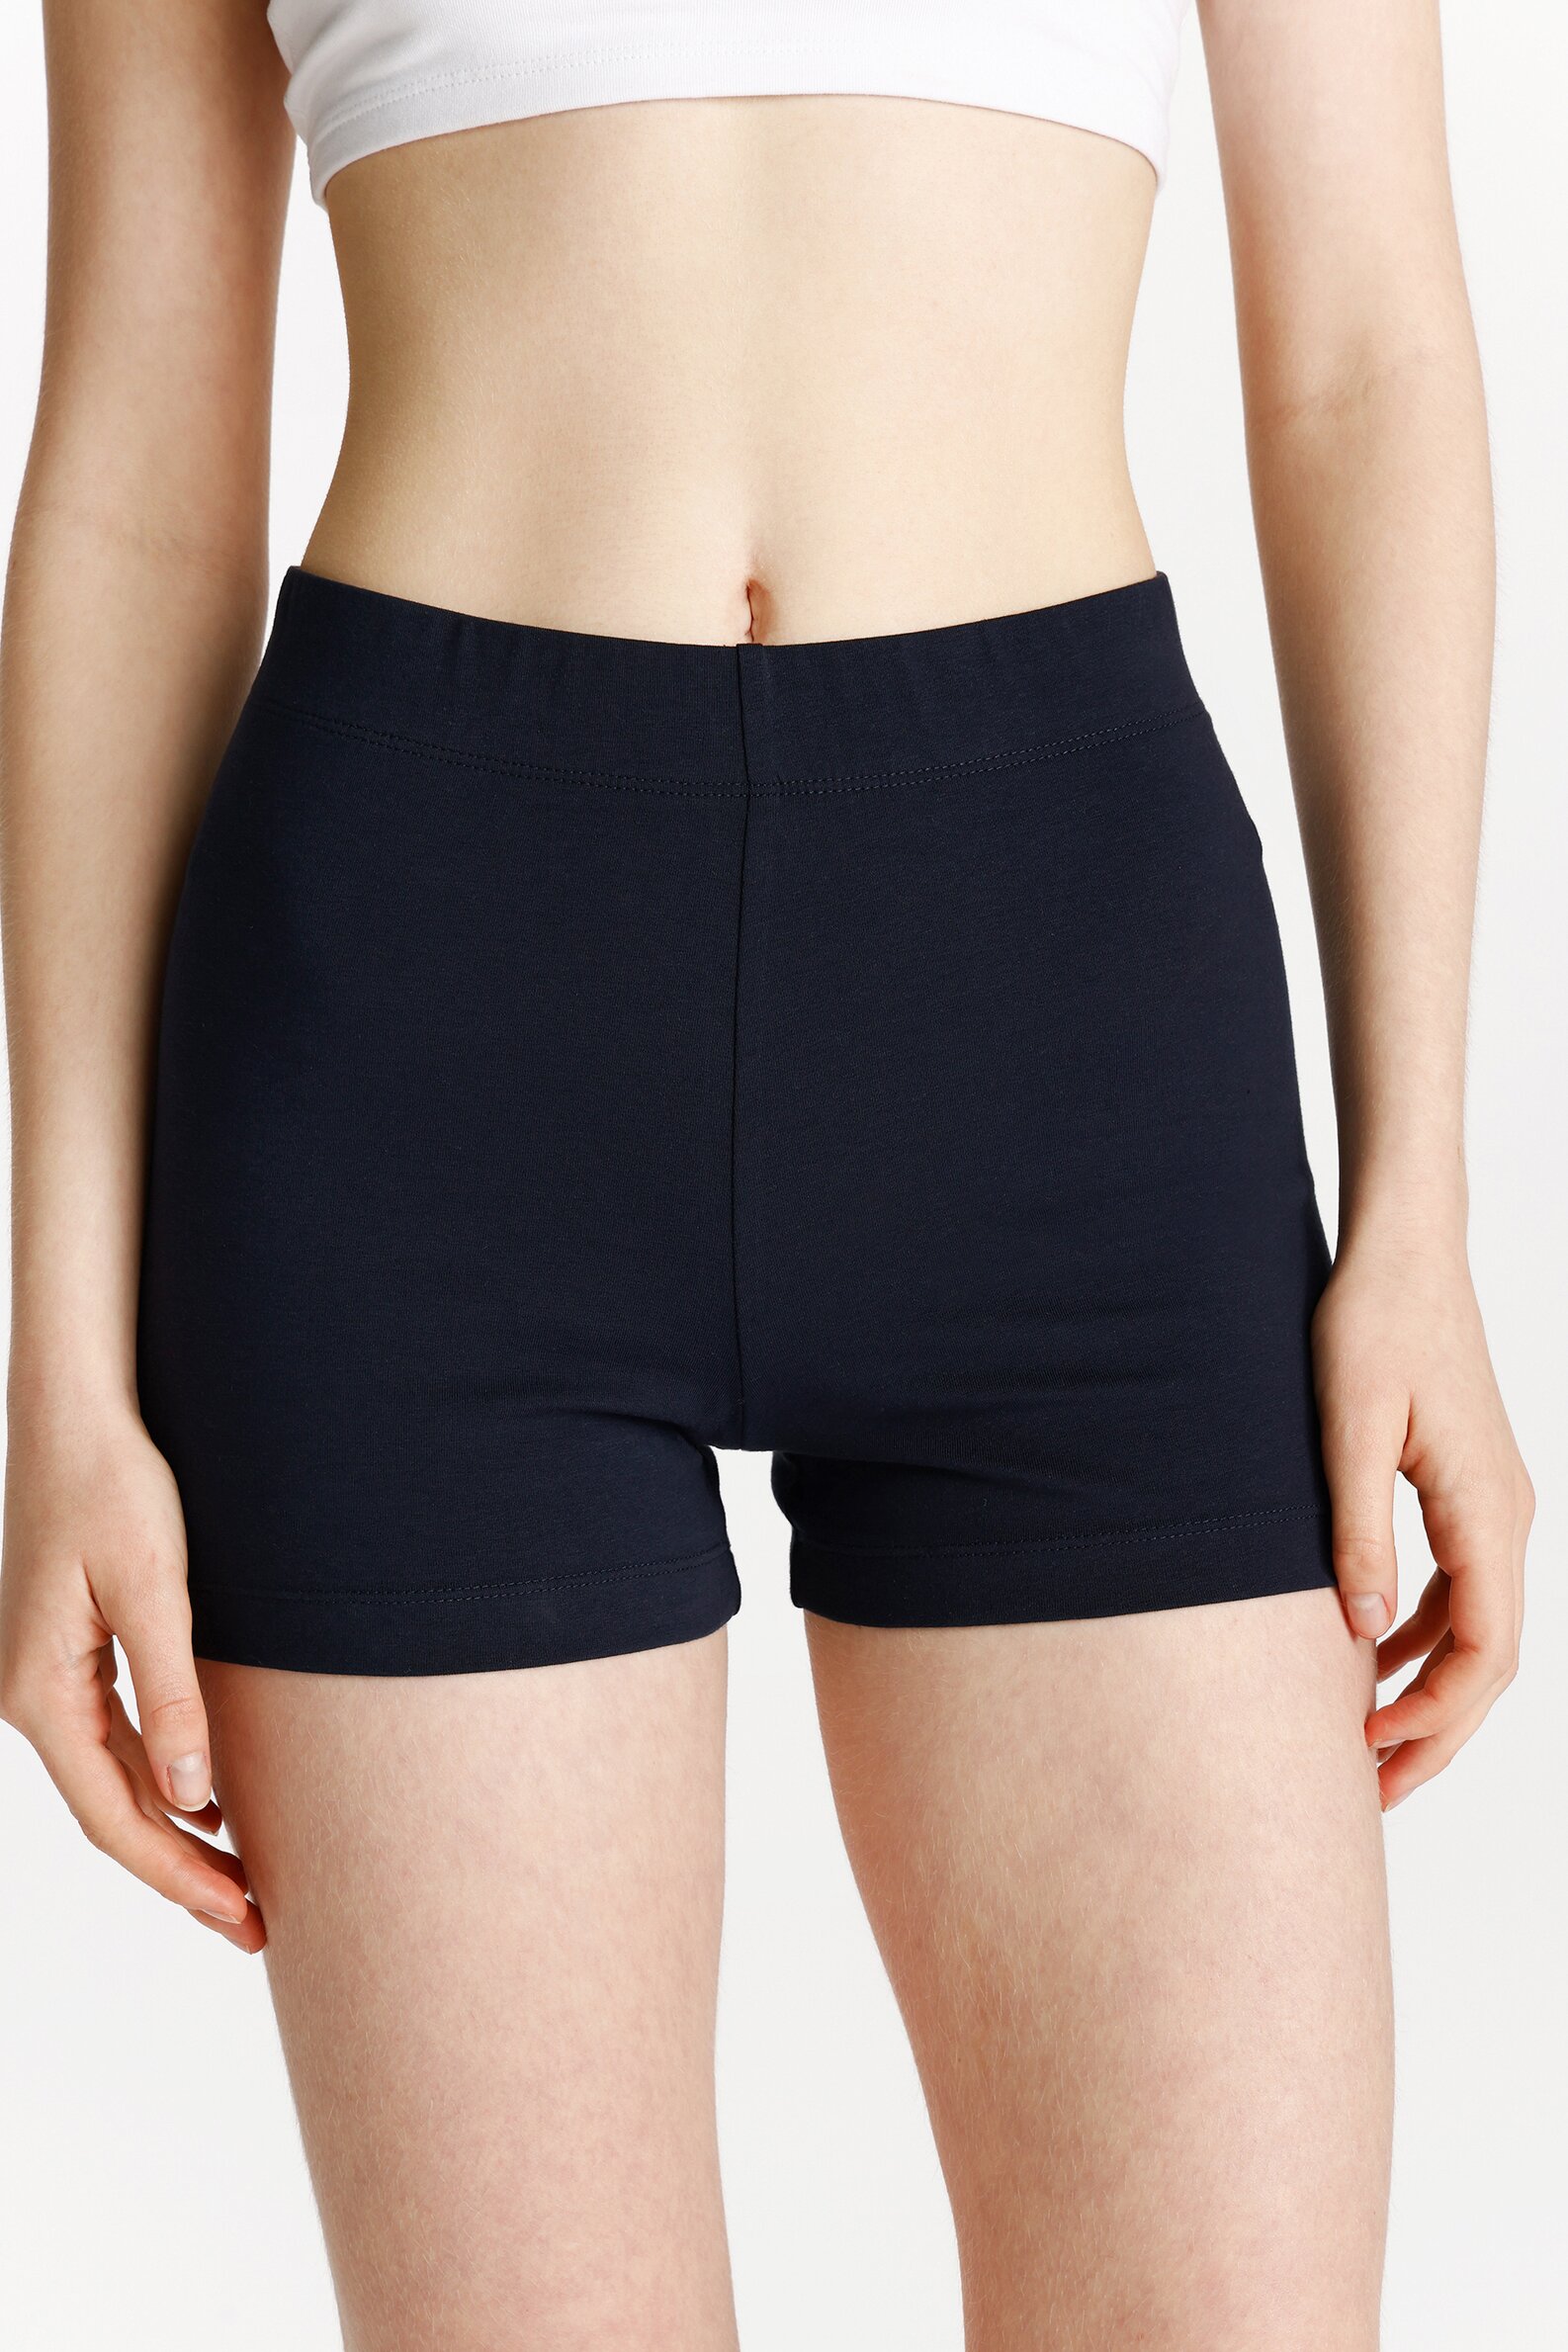 Basic mini shorts - Leggings - CLOTHING - Woman 